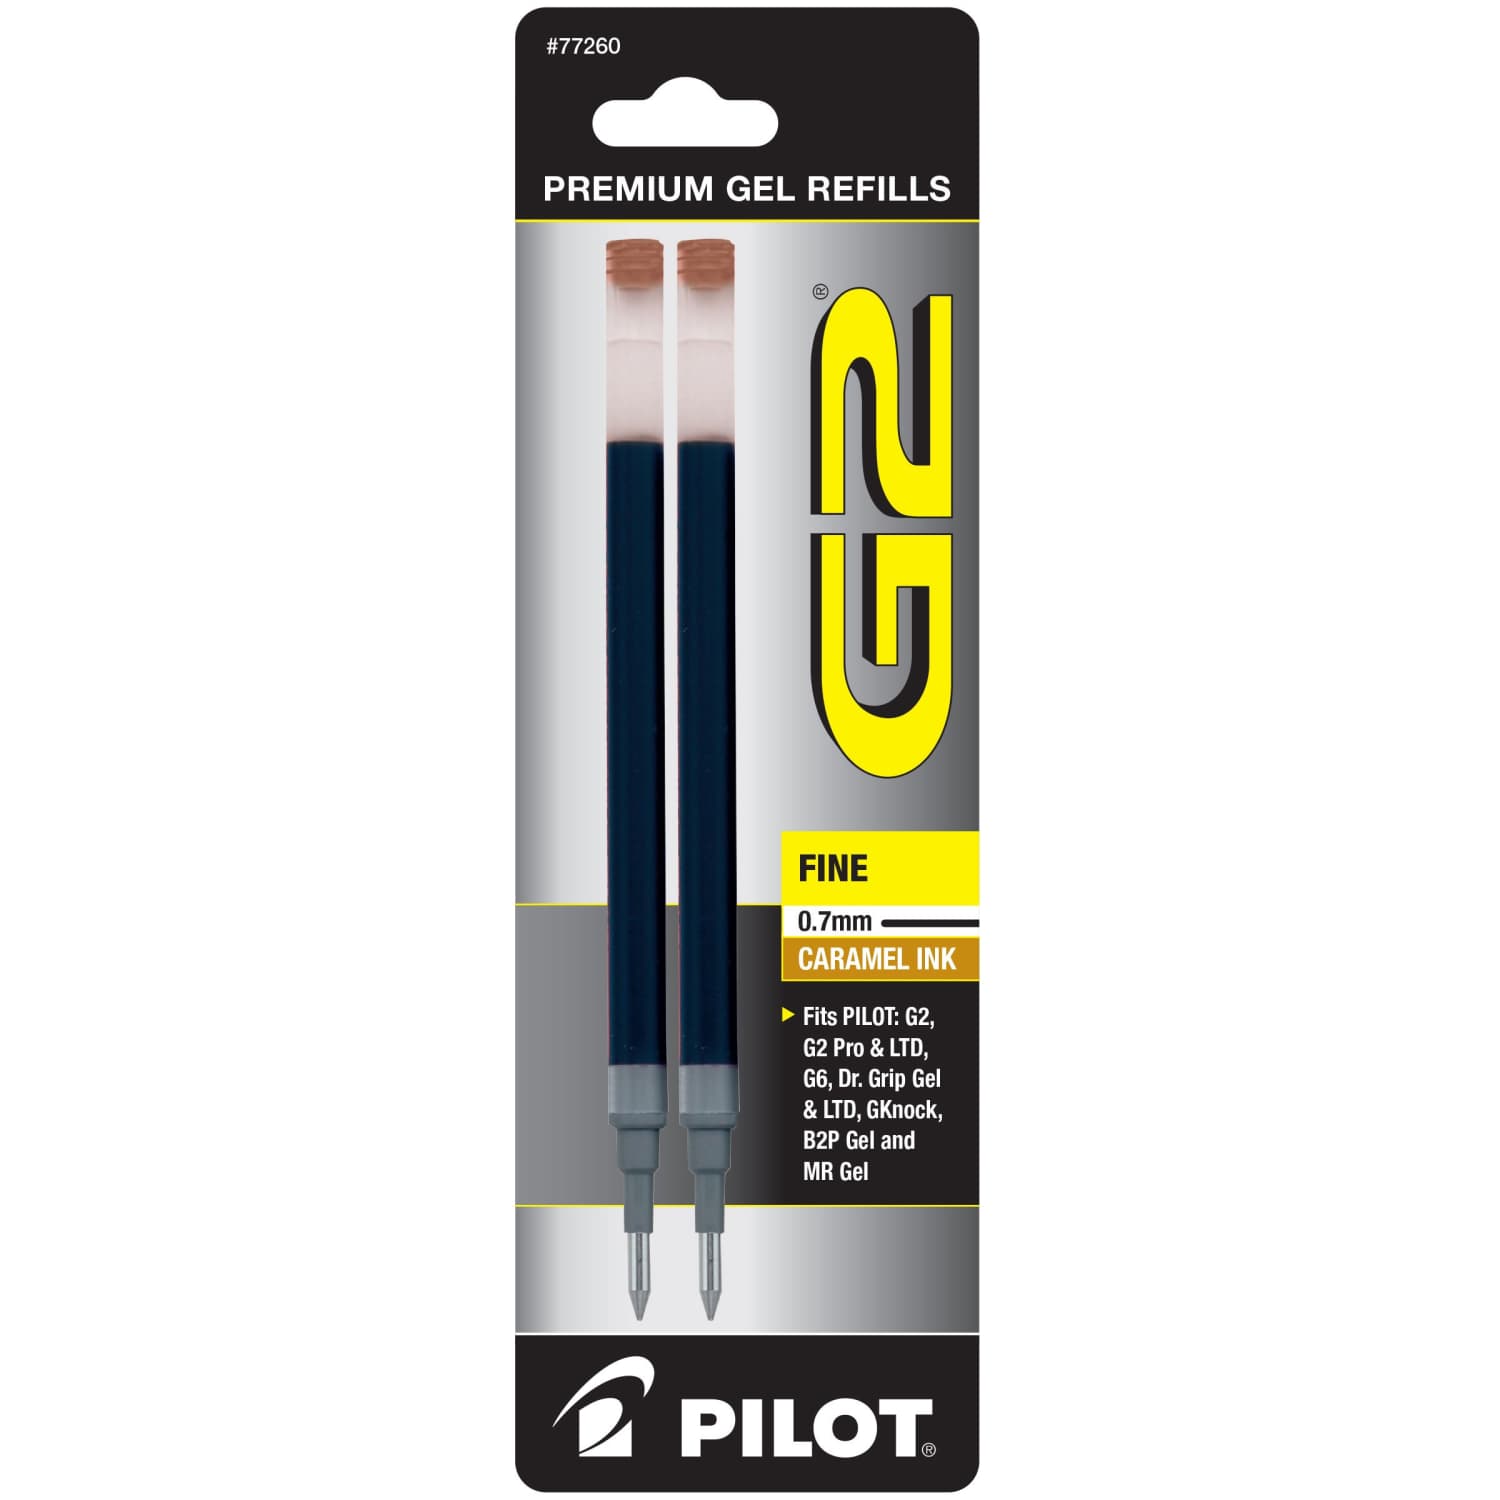  Mr. Pen- Fineliner Pens, 12 Pack, Pens Fine Point